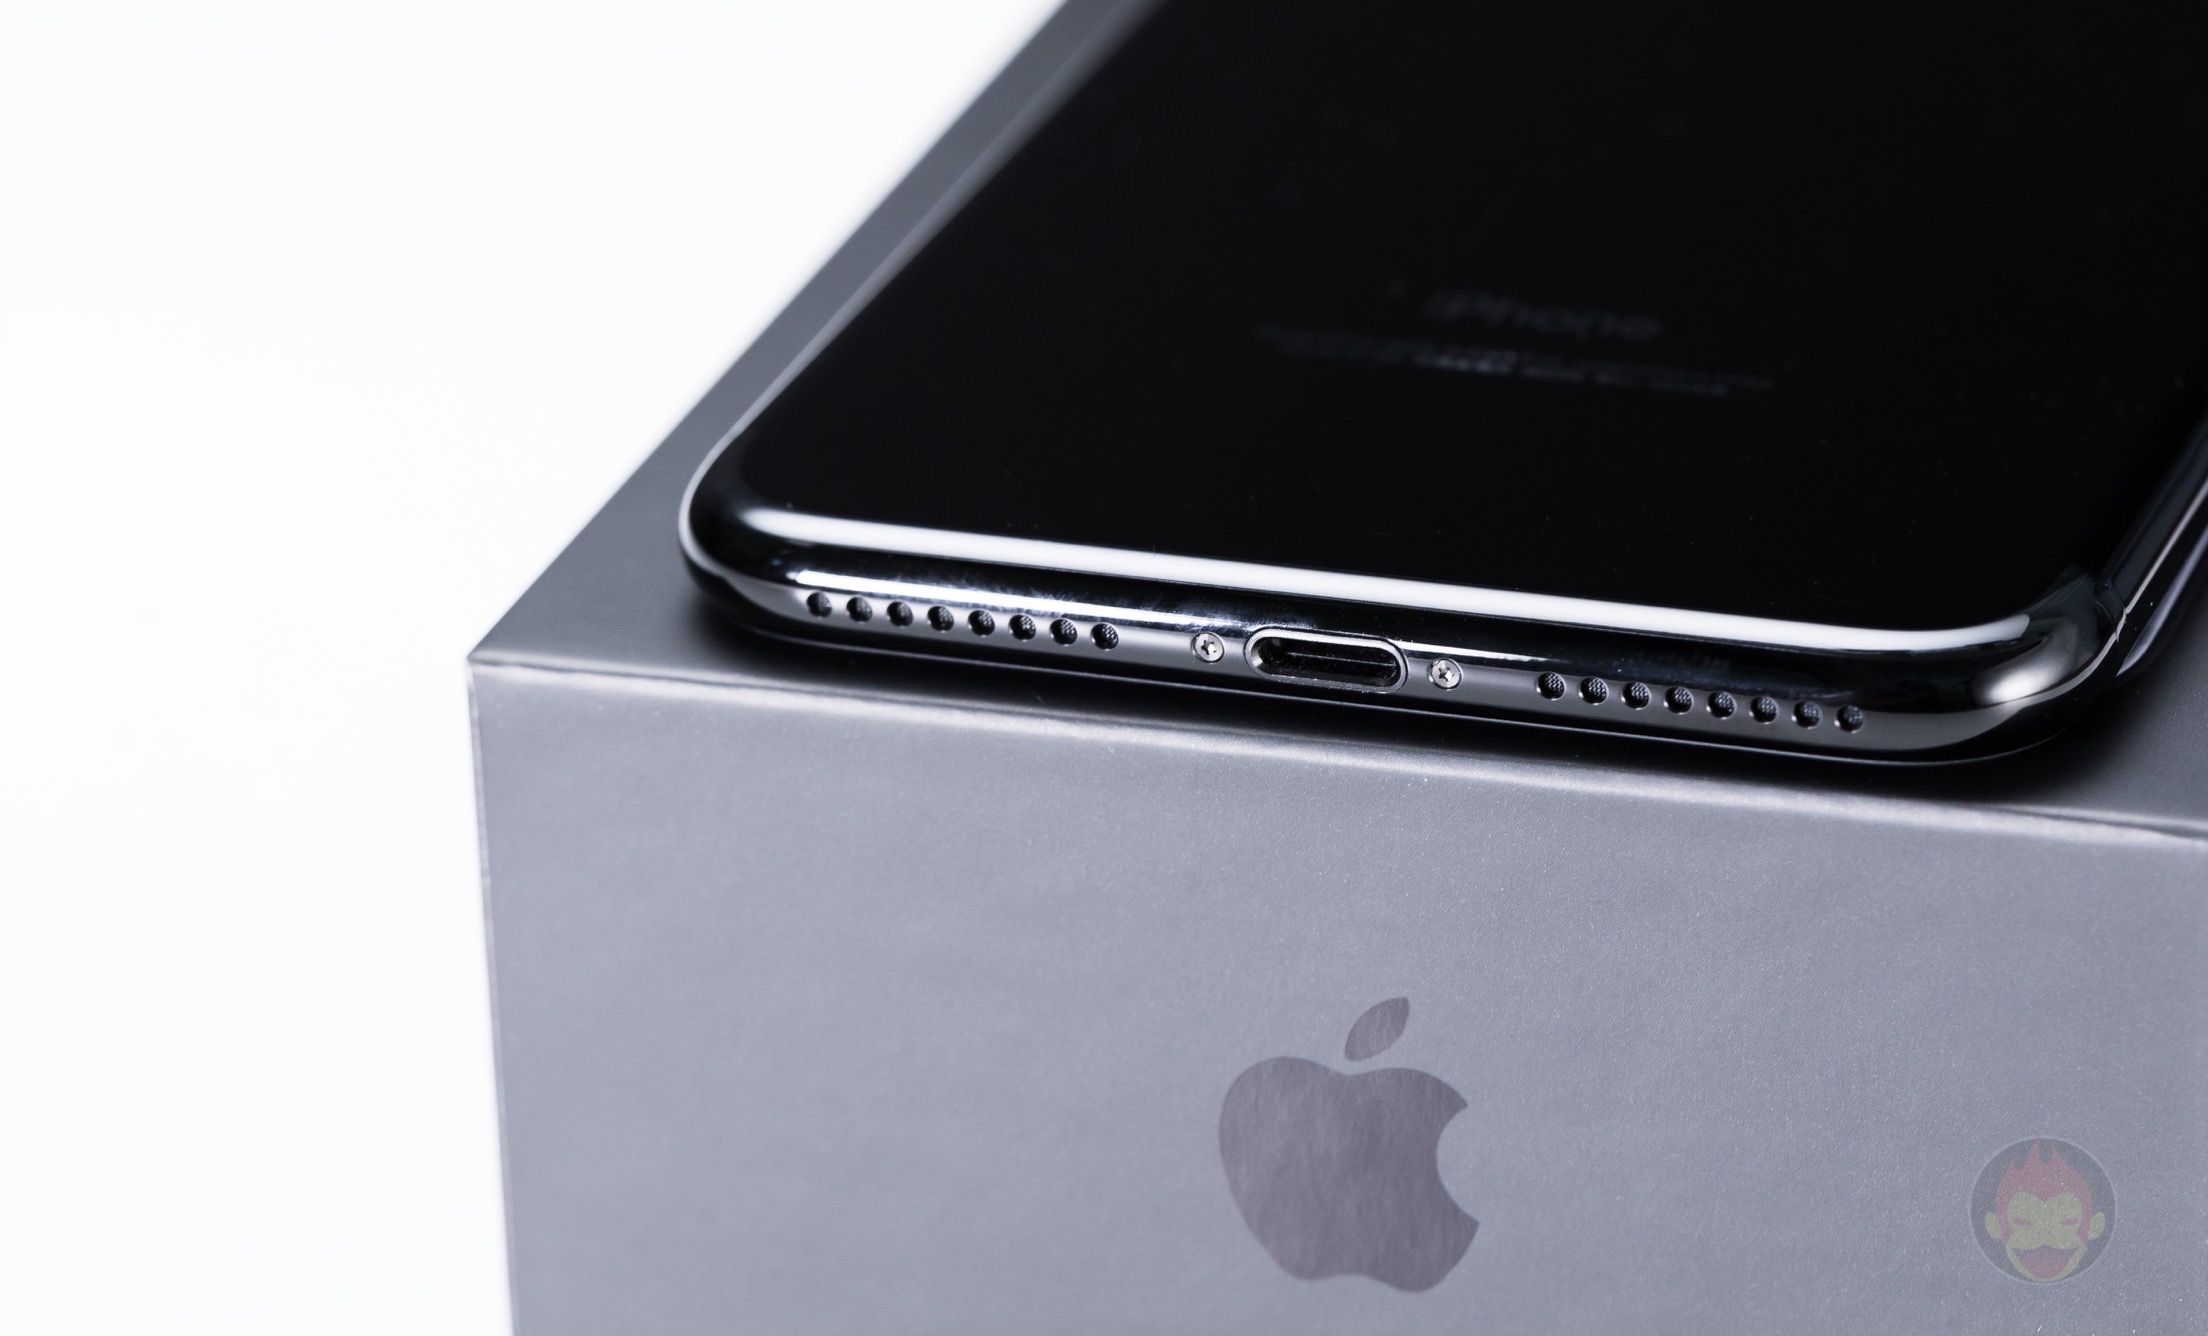 iPhone-7-Plus-Jet-Black-Design-review-04.jpg